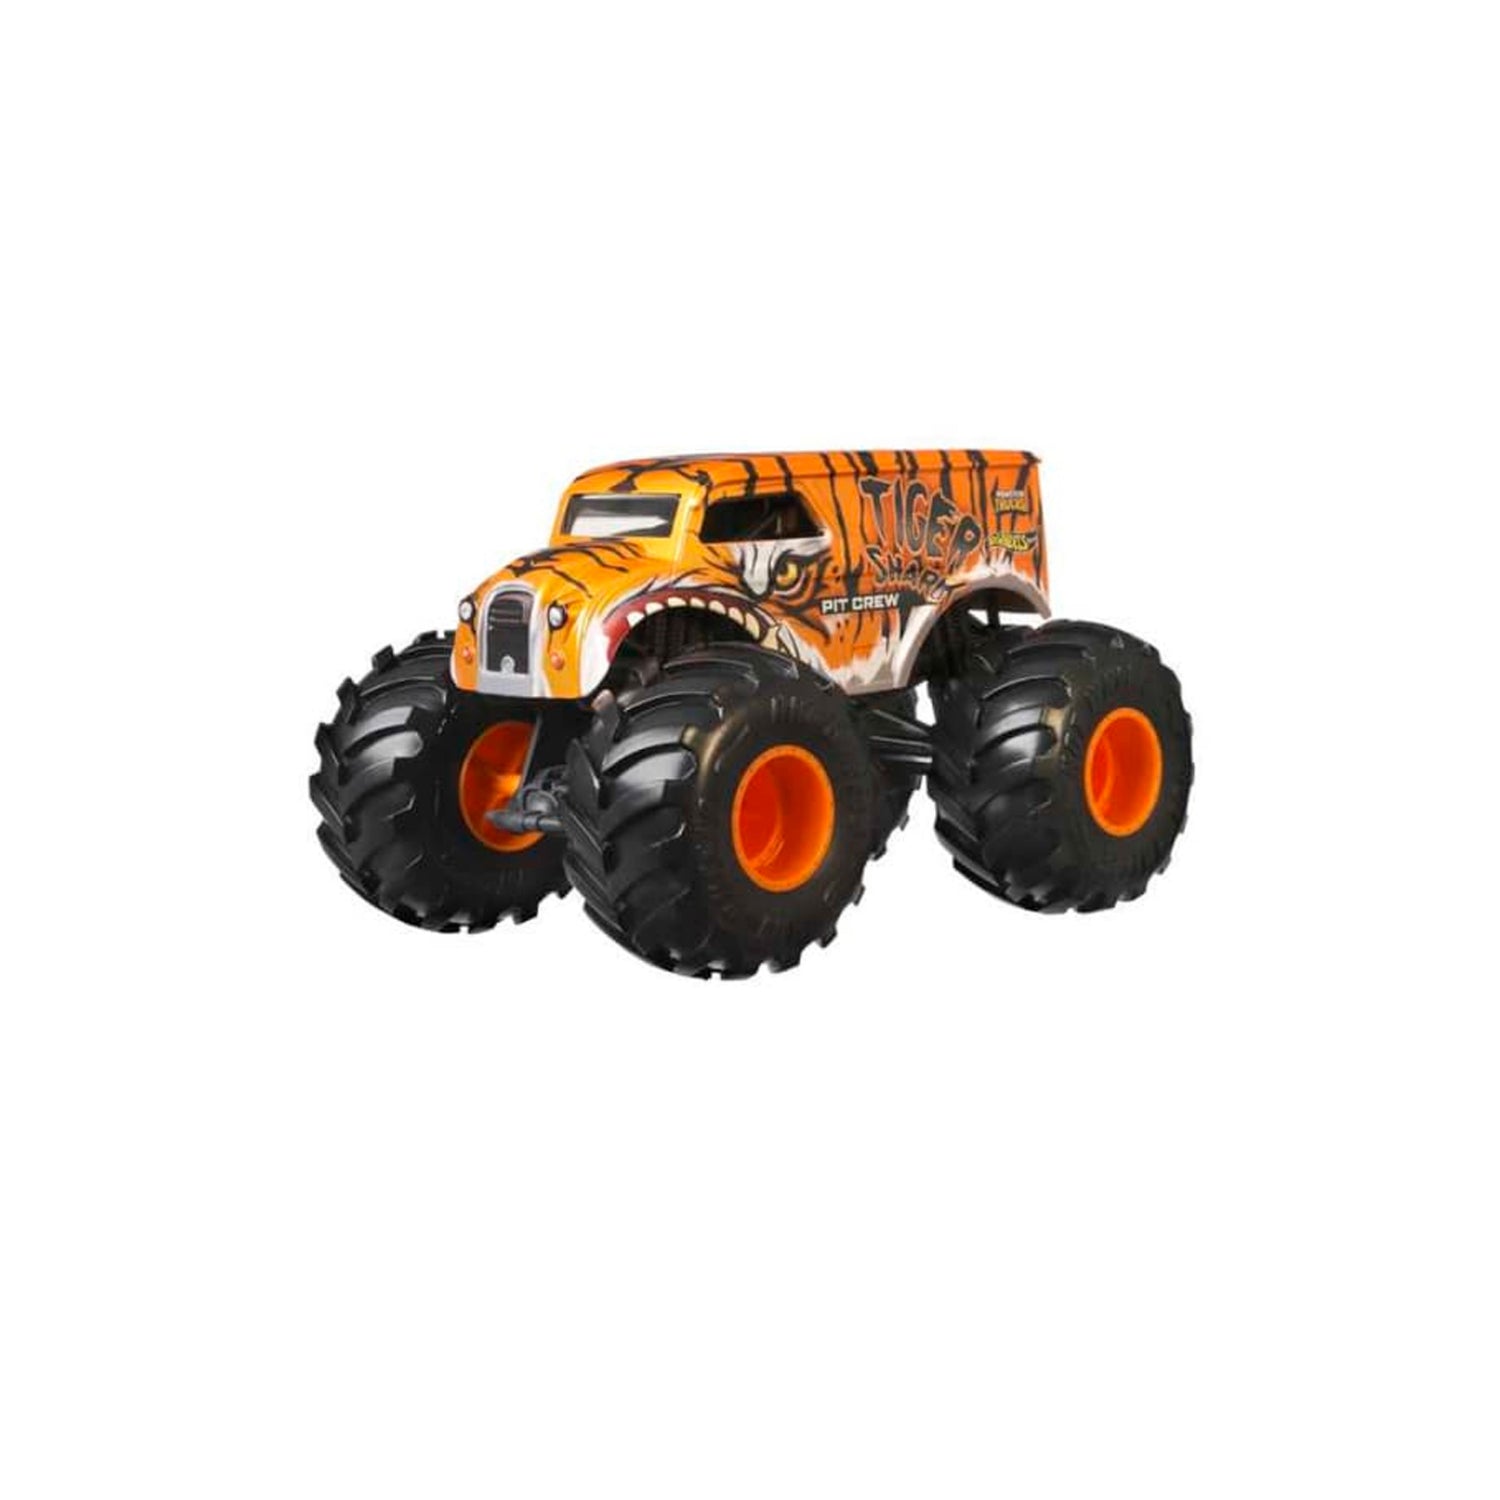  Hot Wheels Monster Trucks Demo Derby, 1:24 Scale Kids